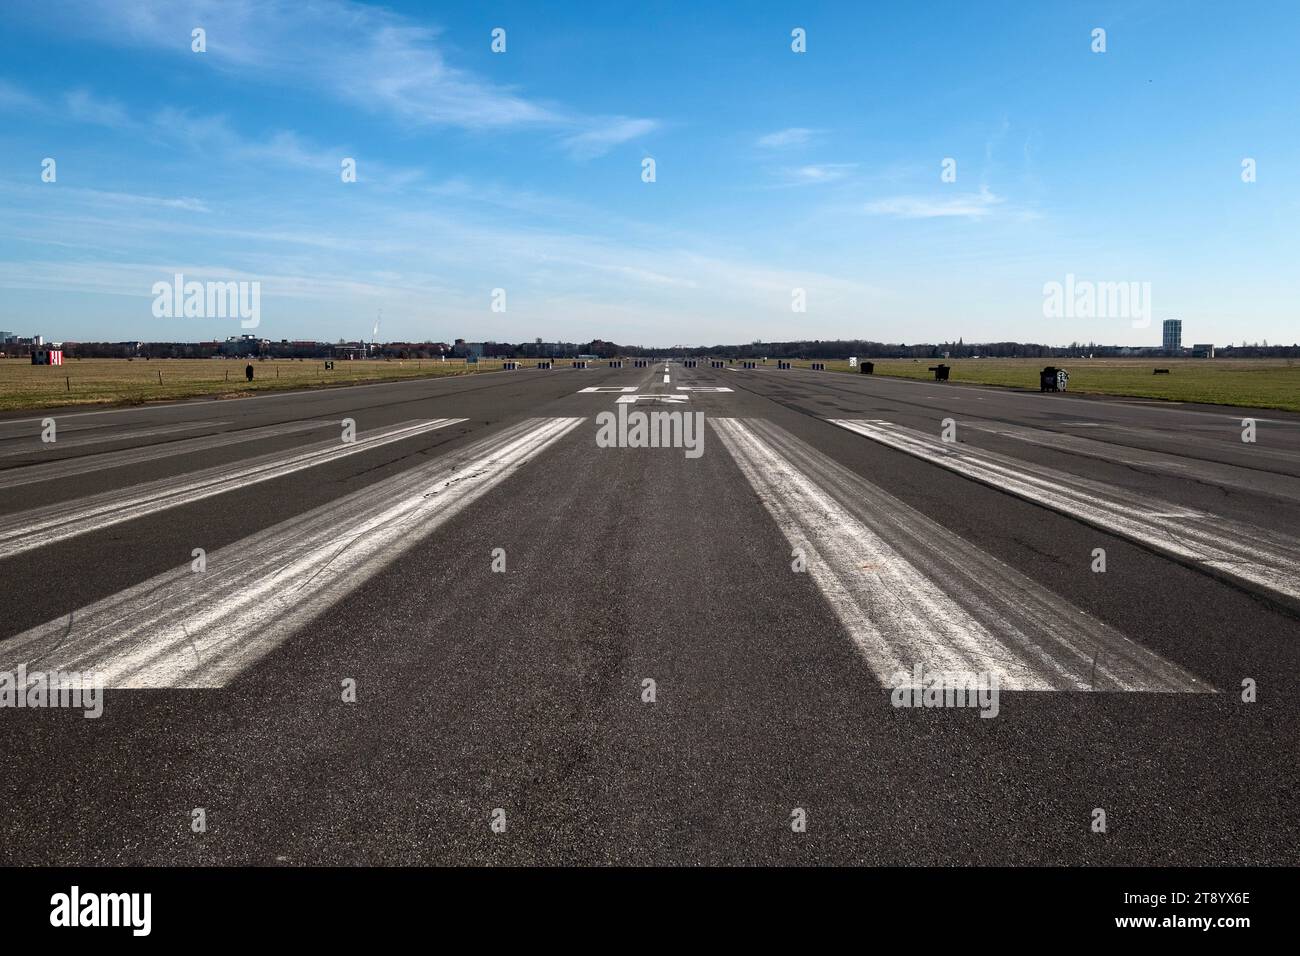 A view of the runway at the disused Berlin Tempelhof airport / Tempelhofer Feld Stock Photo